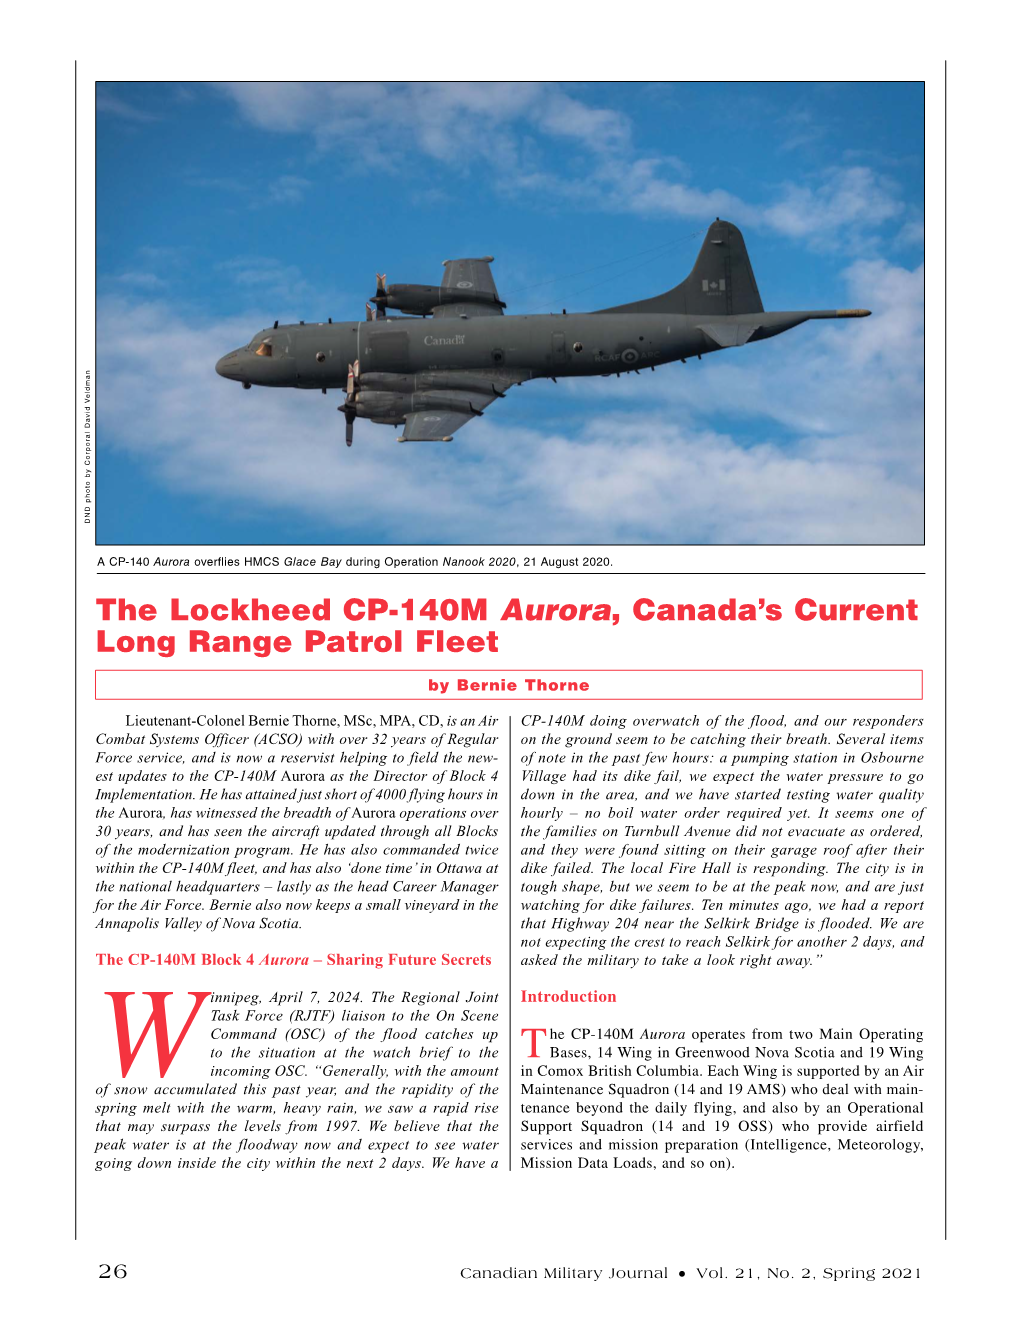 The Lockheed CP-140M Aurora, Canada's Current Long Range Patrol Fleet